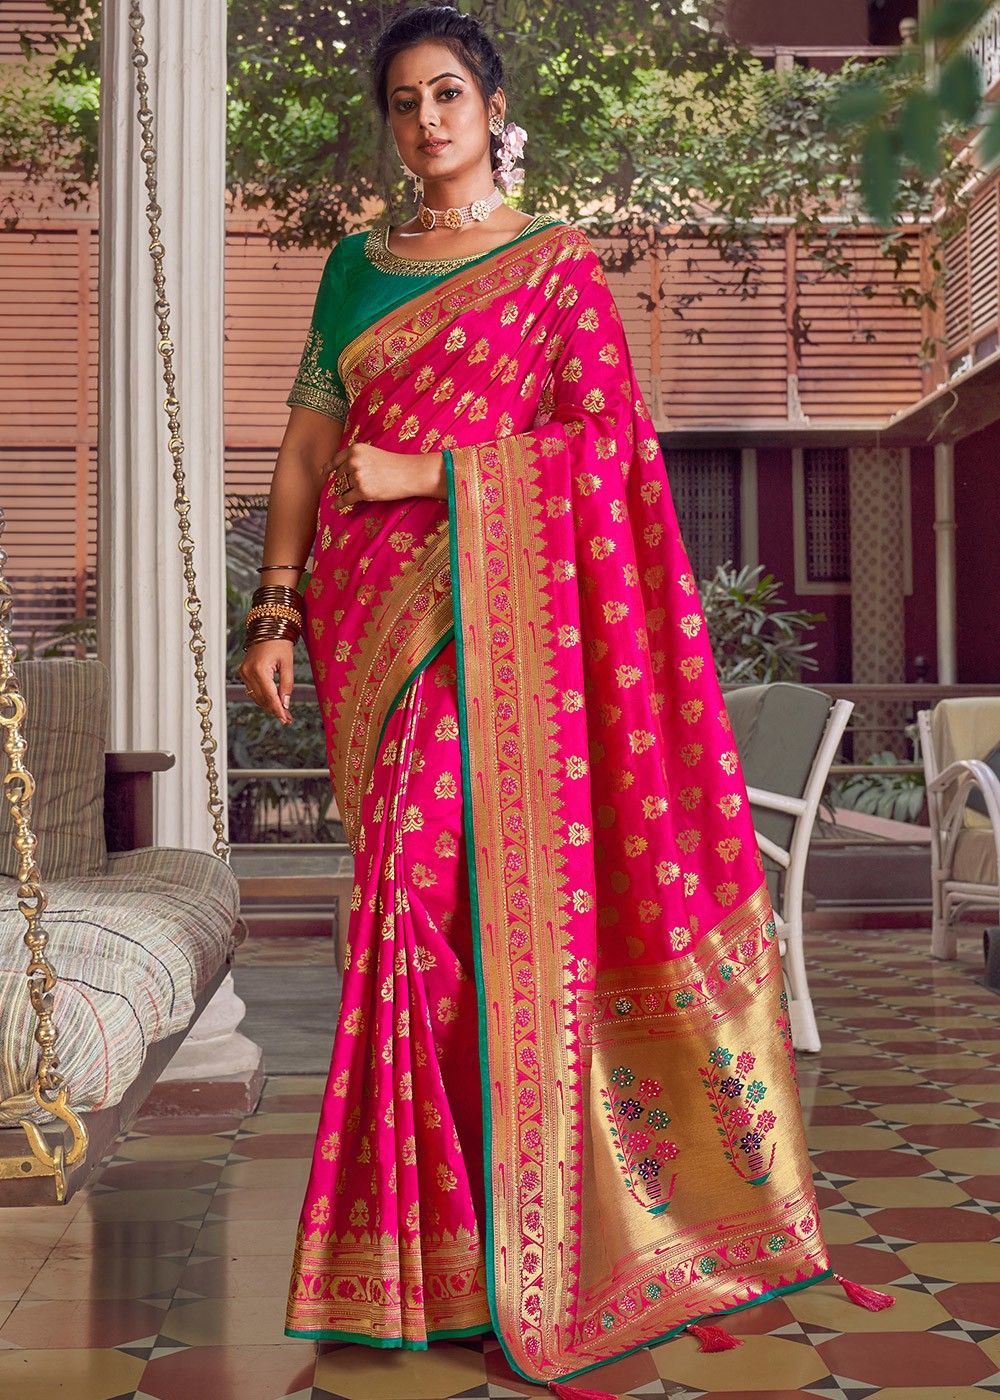 Learn best way to drape a heavy saree to look slim | Dolly Jain Saree  Draping - YouTube